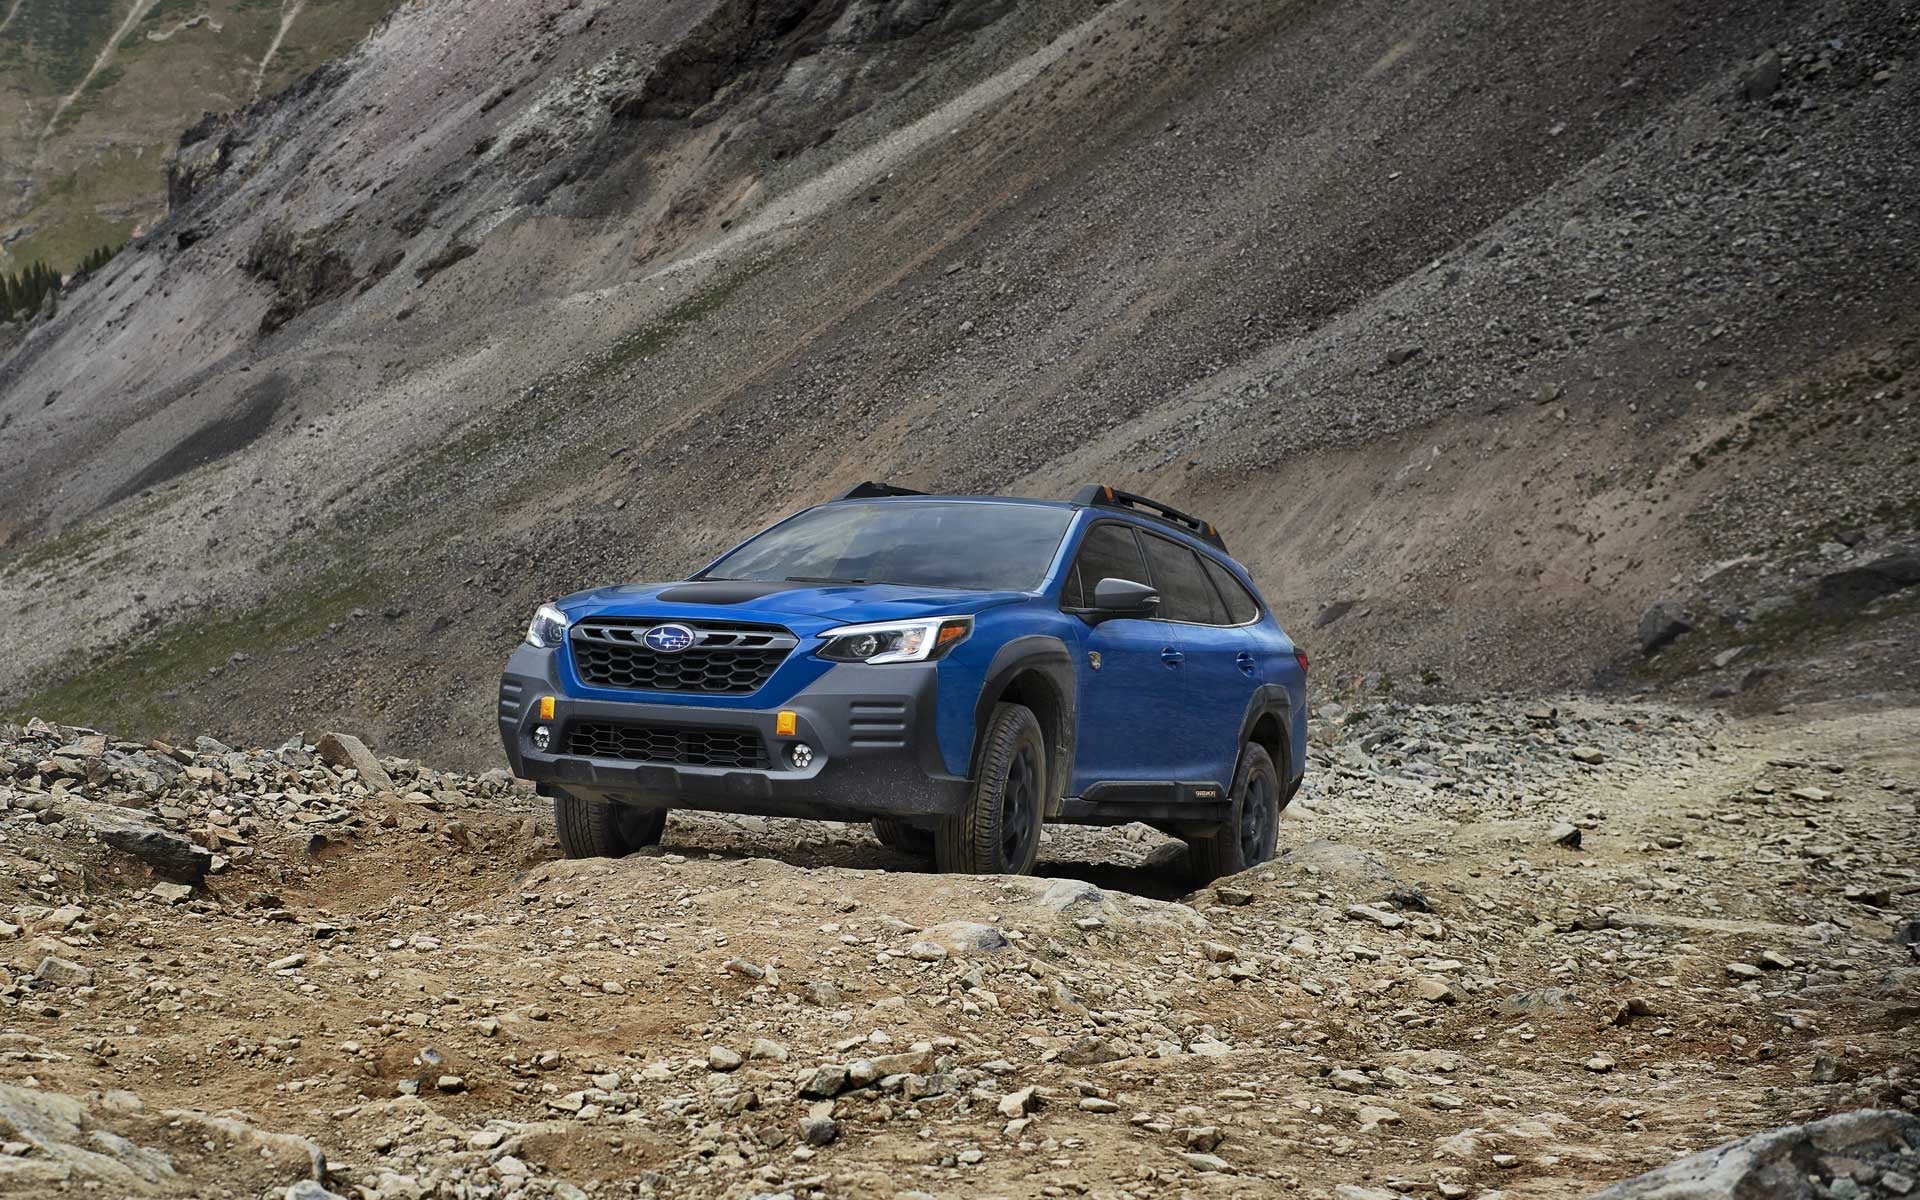 Valley Subaru of Longmont in Longmont CO